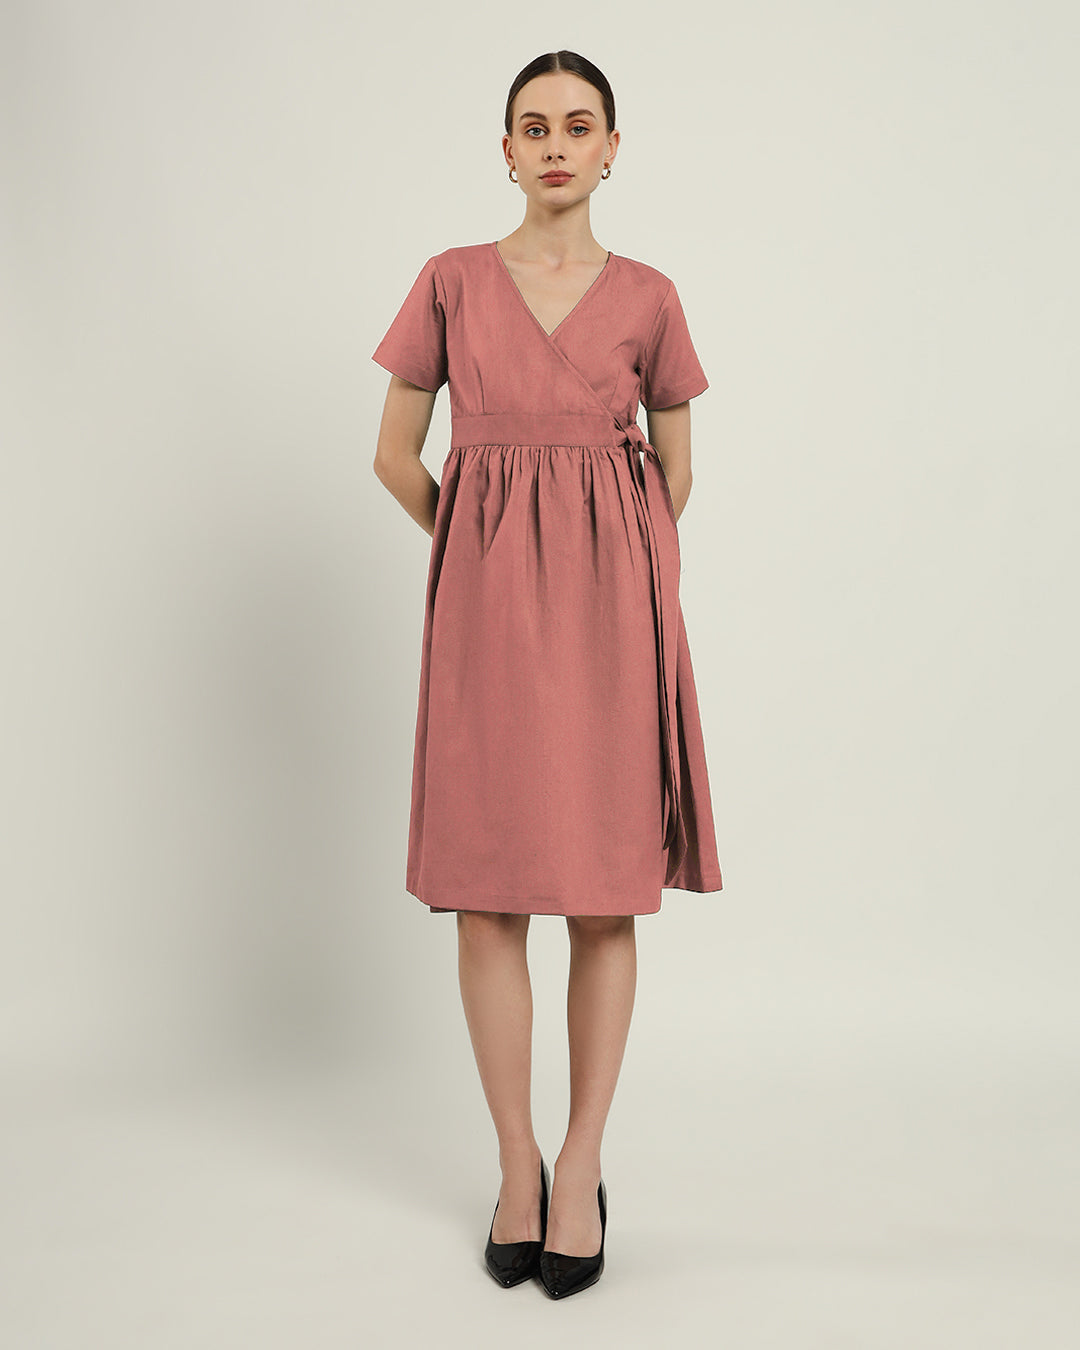 The Miyoshi Ivory Pink Cotton Dress